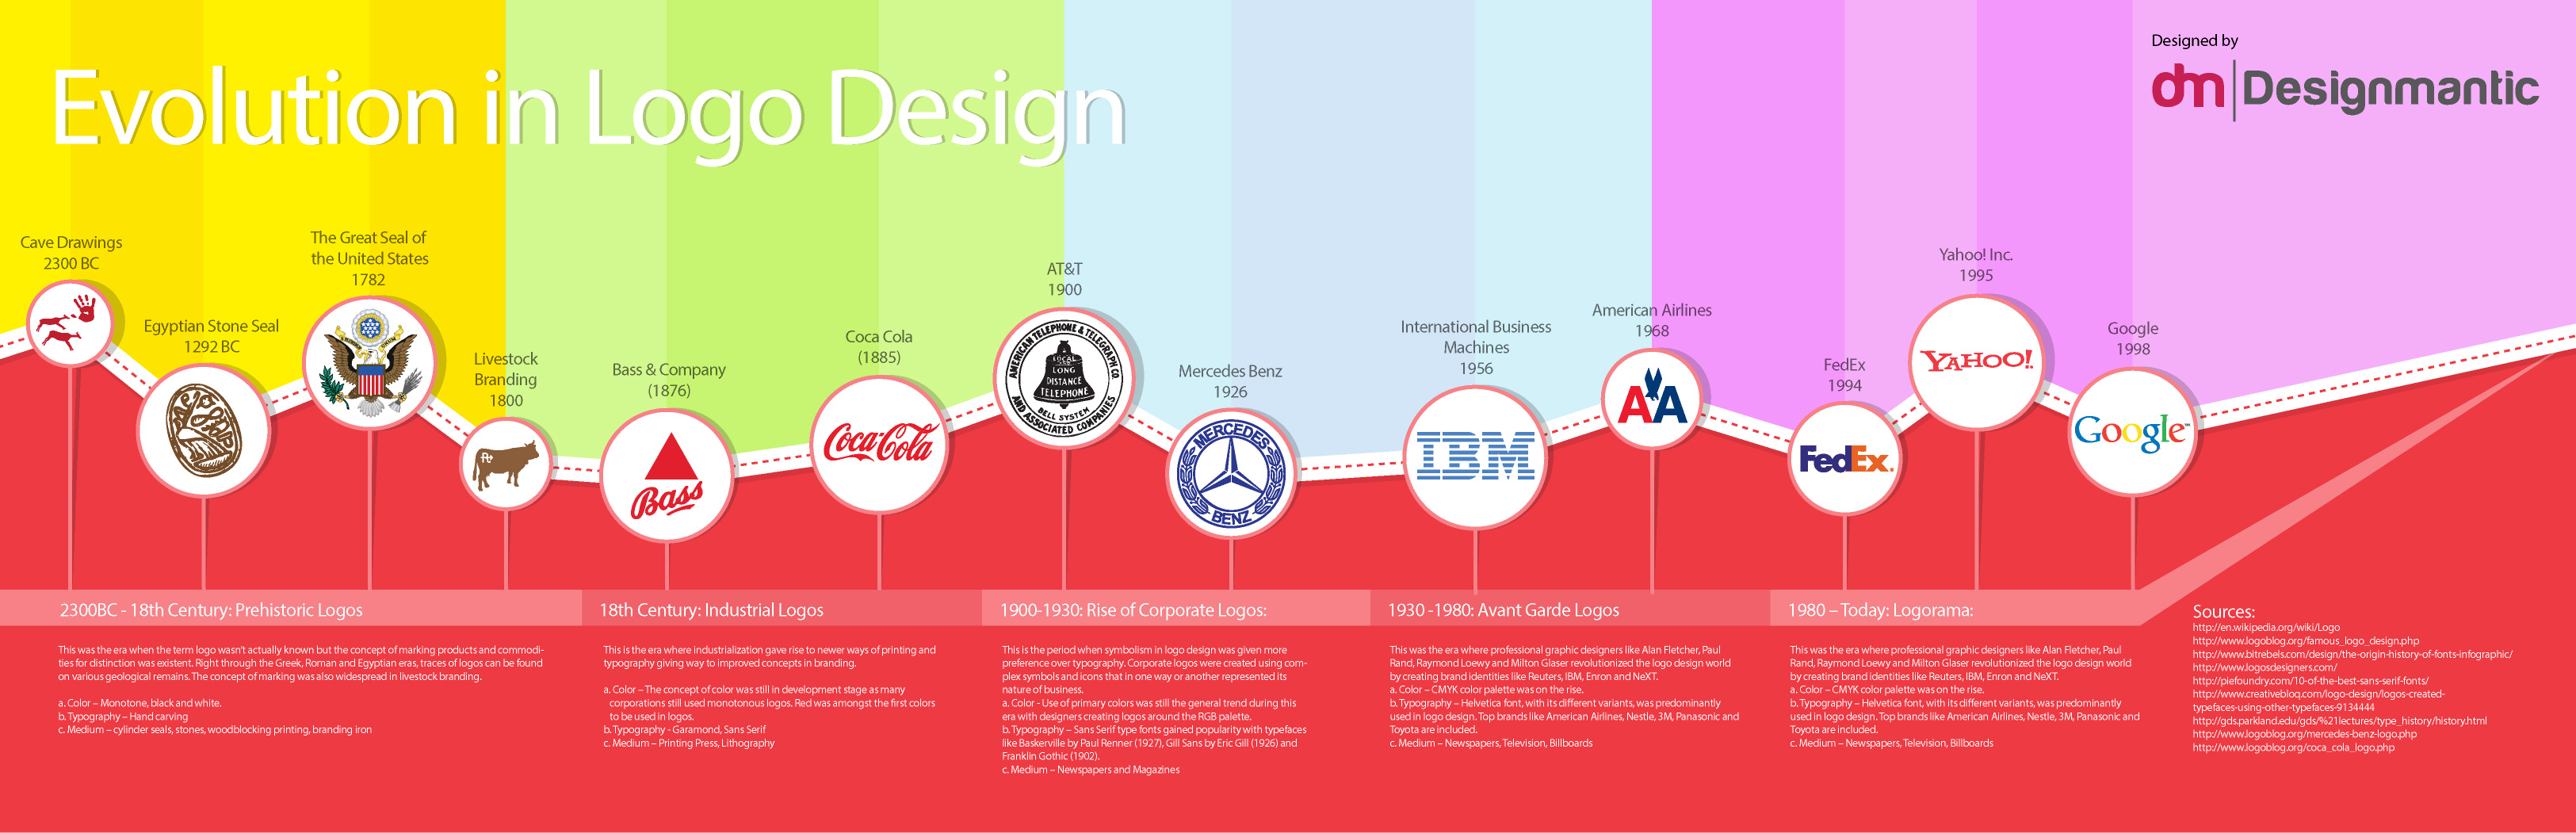 10 Decades of Logo Design Evolution